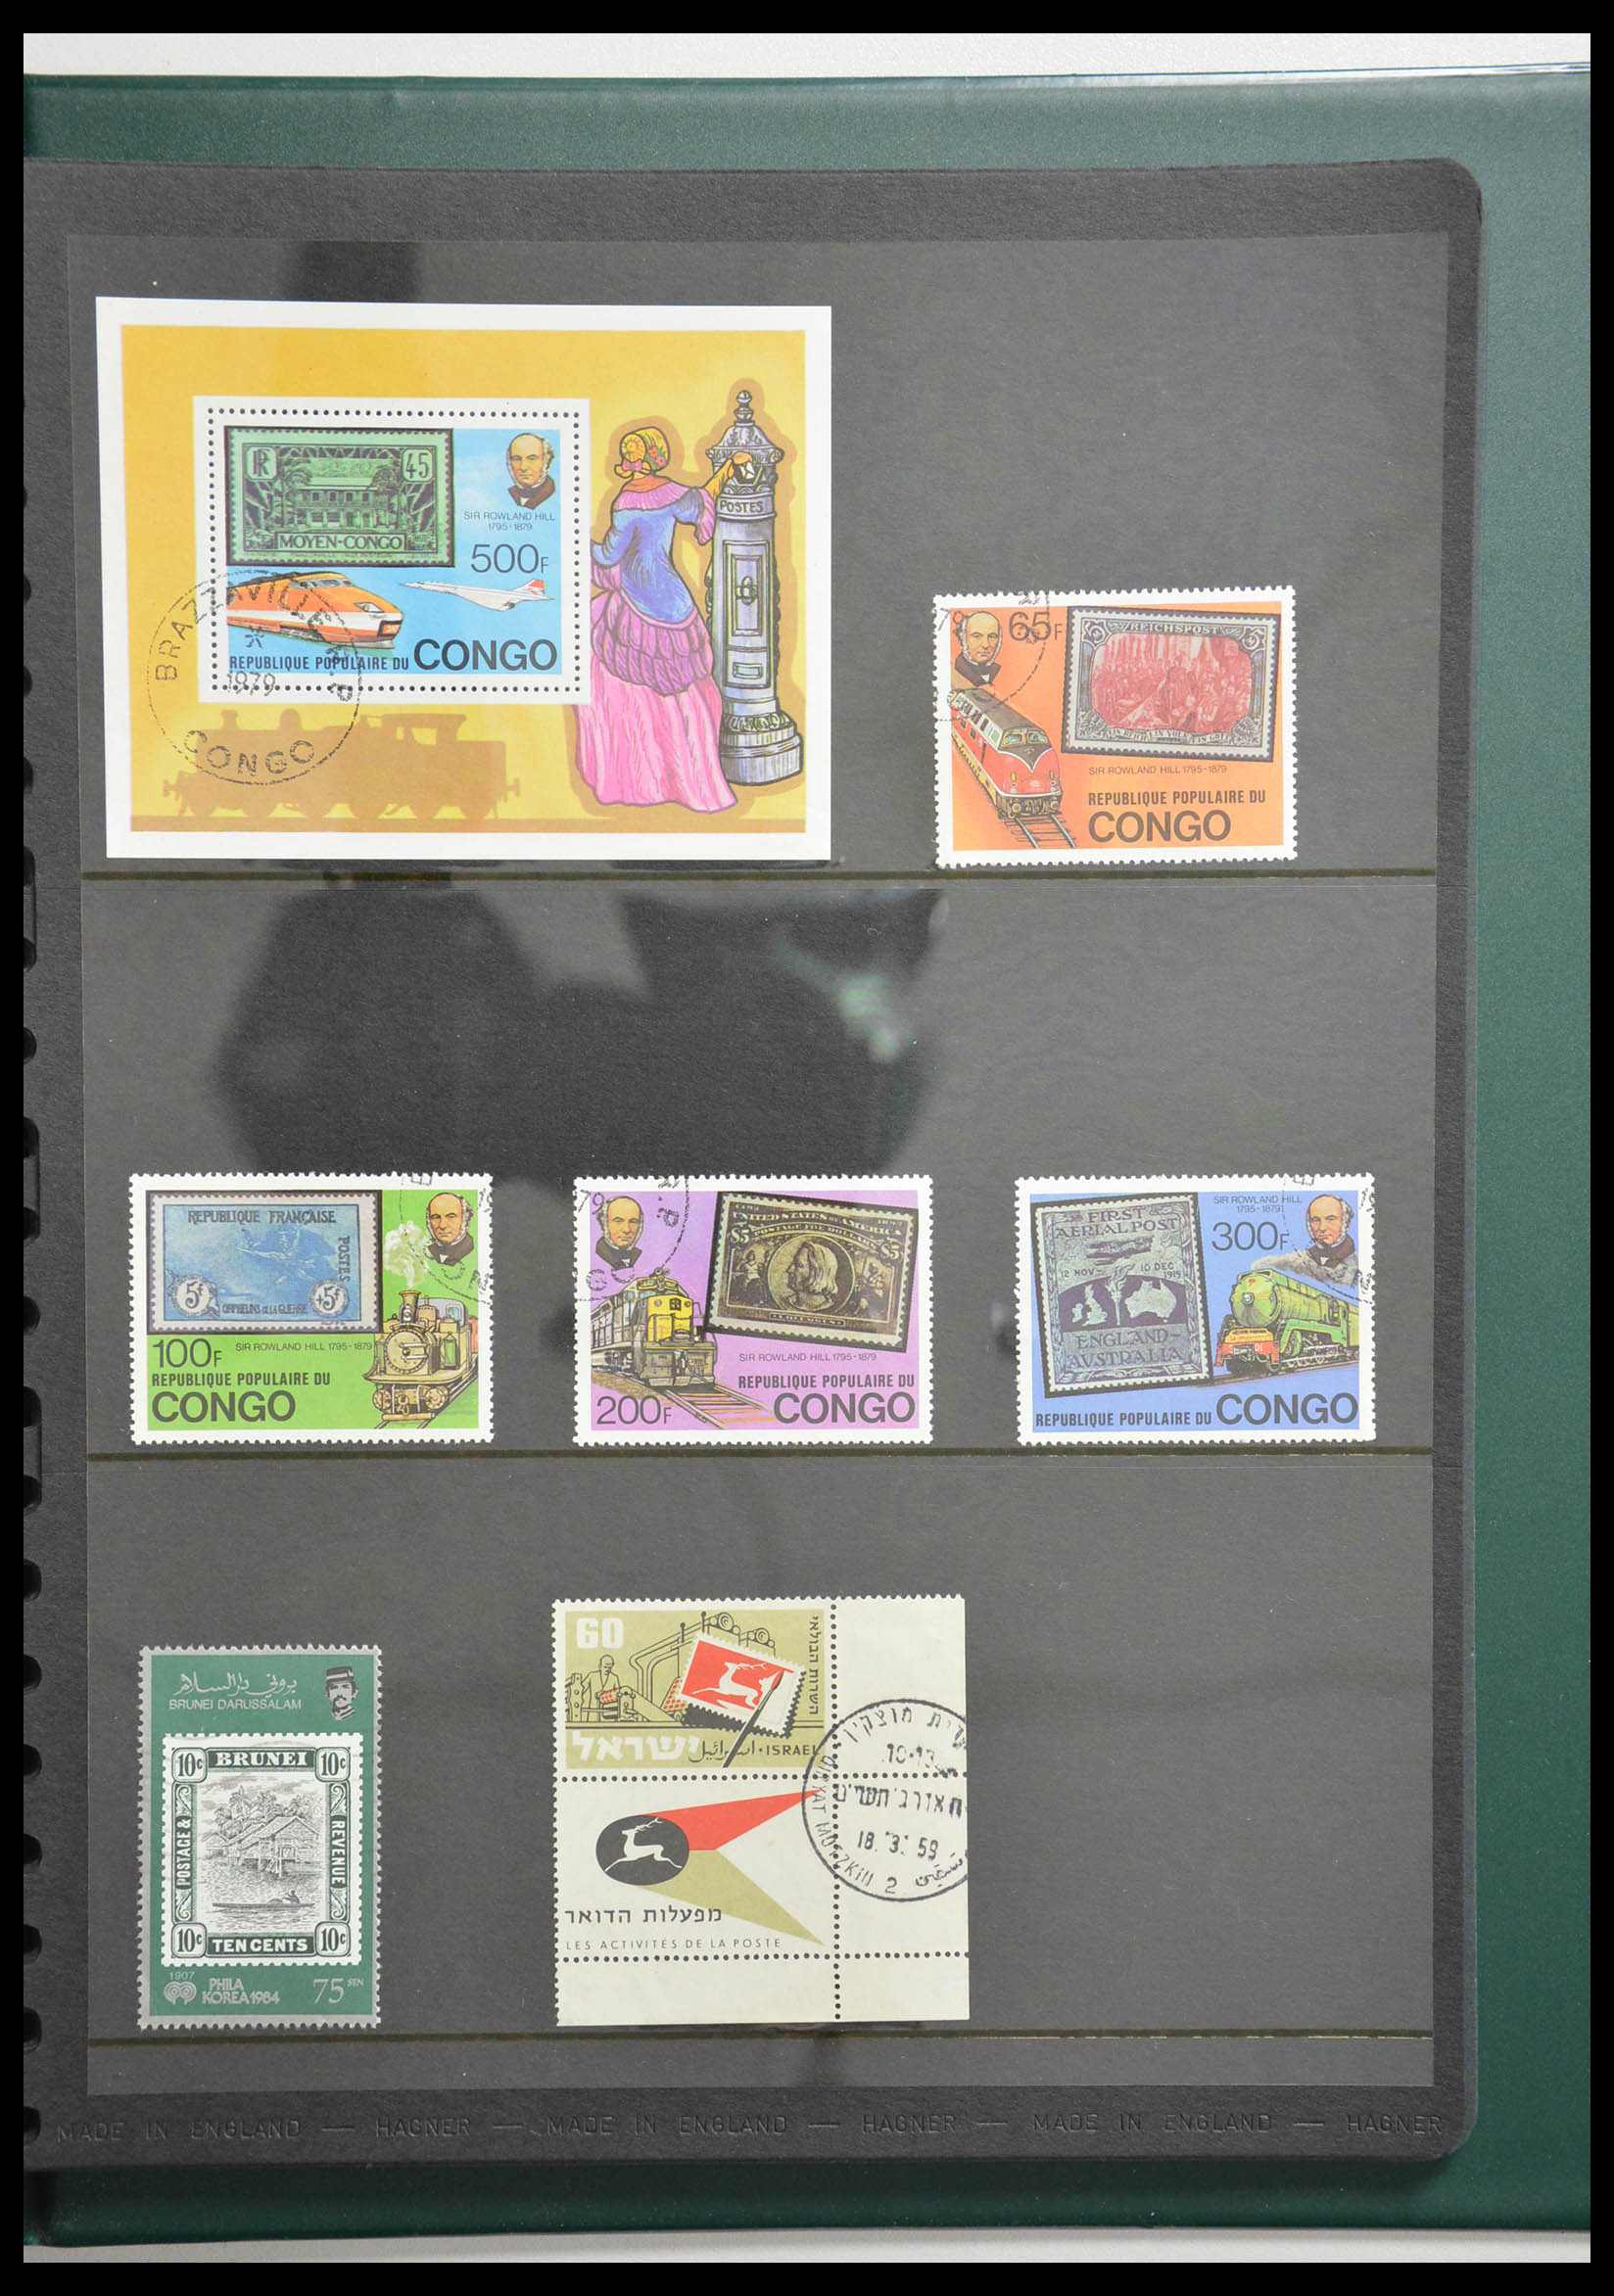 28337 082 - 28337 Postzegel op postzegel 1840-2001.